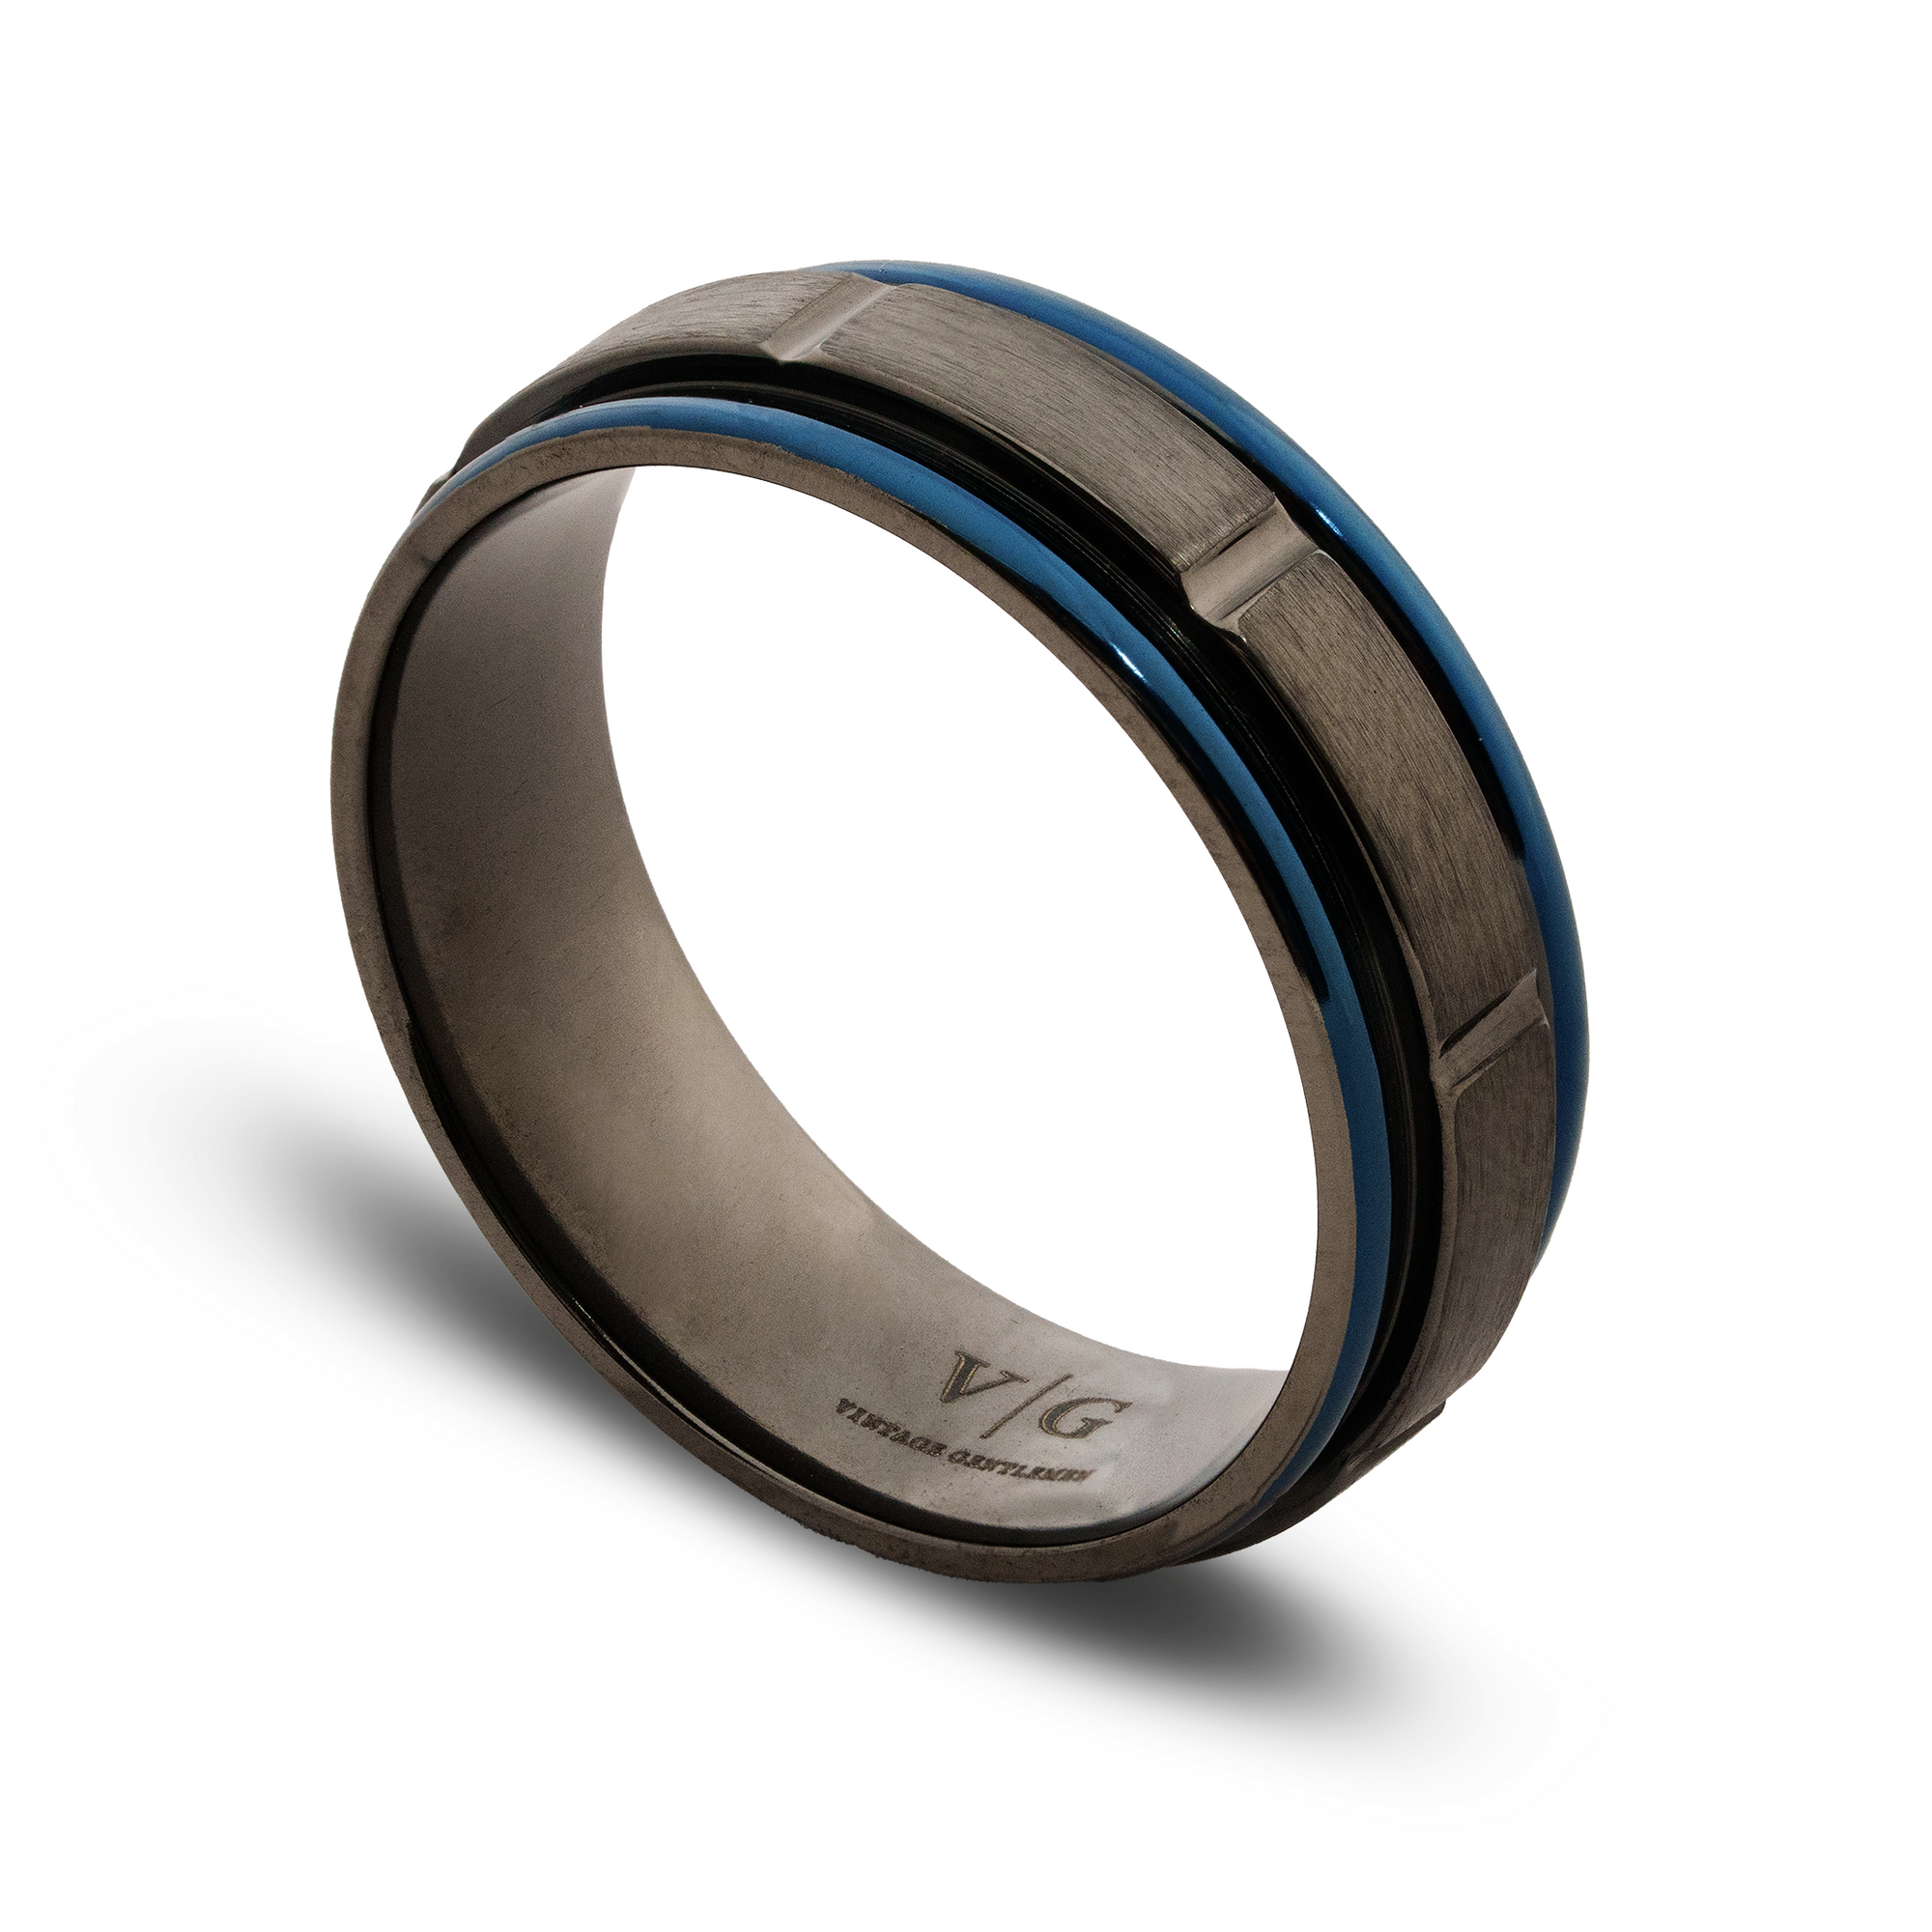 The “Tritan” Ring